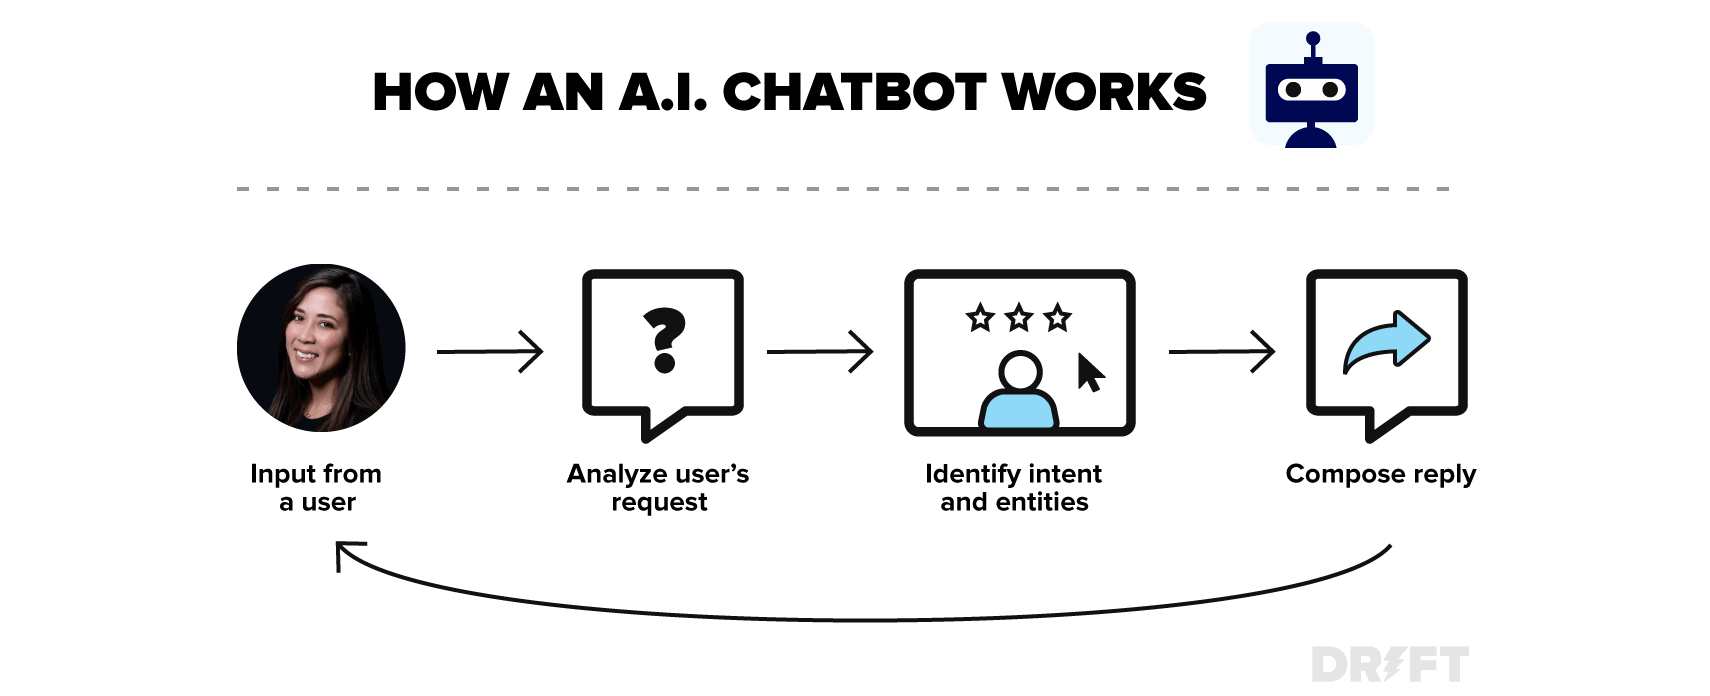 online artificial intelligence best ai chatbot